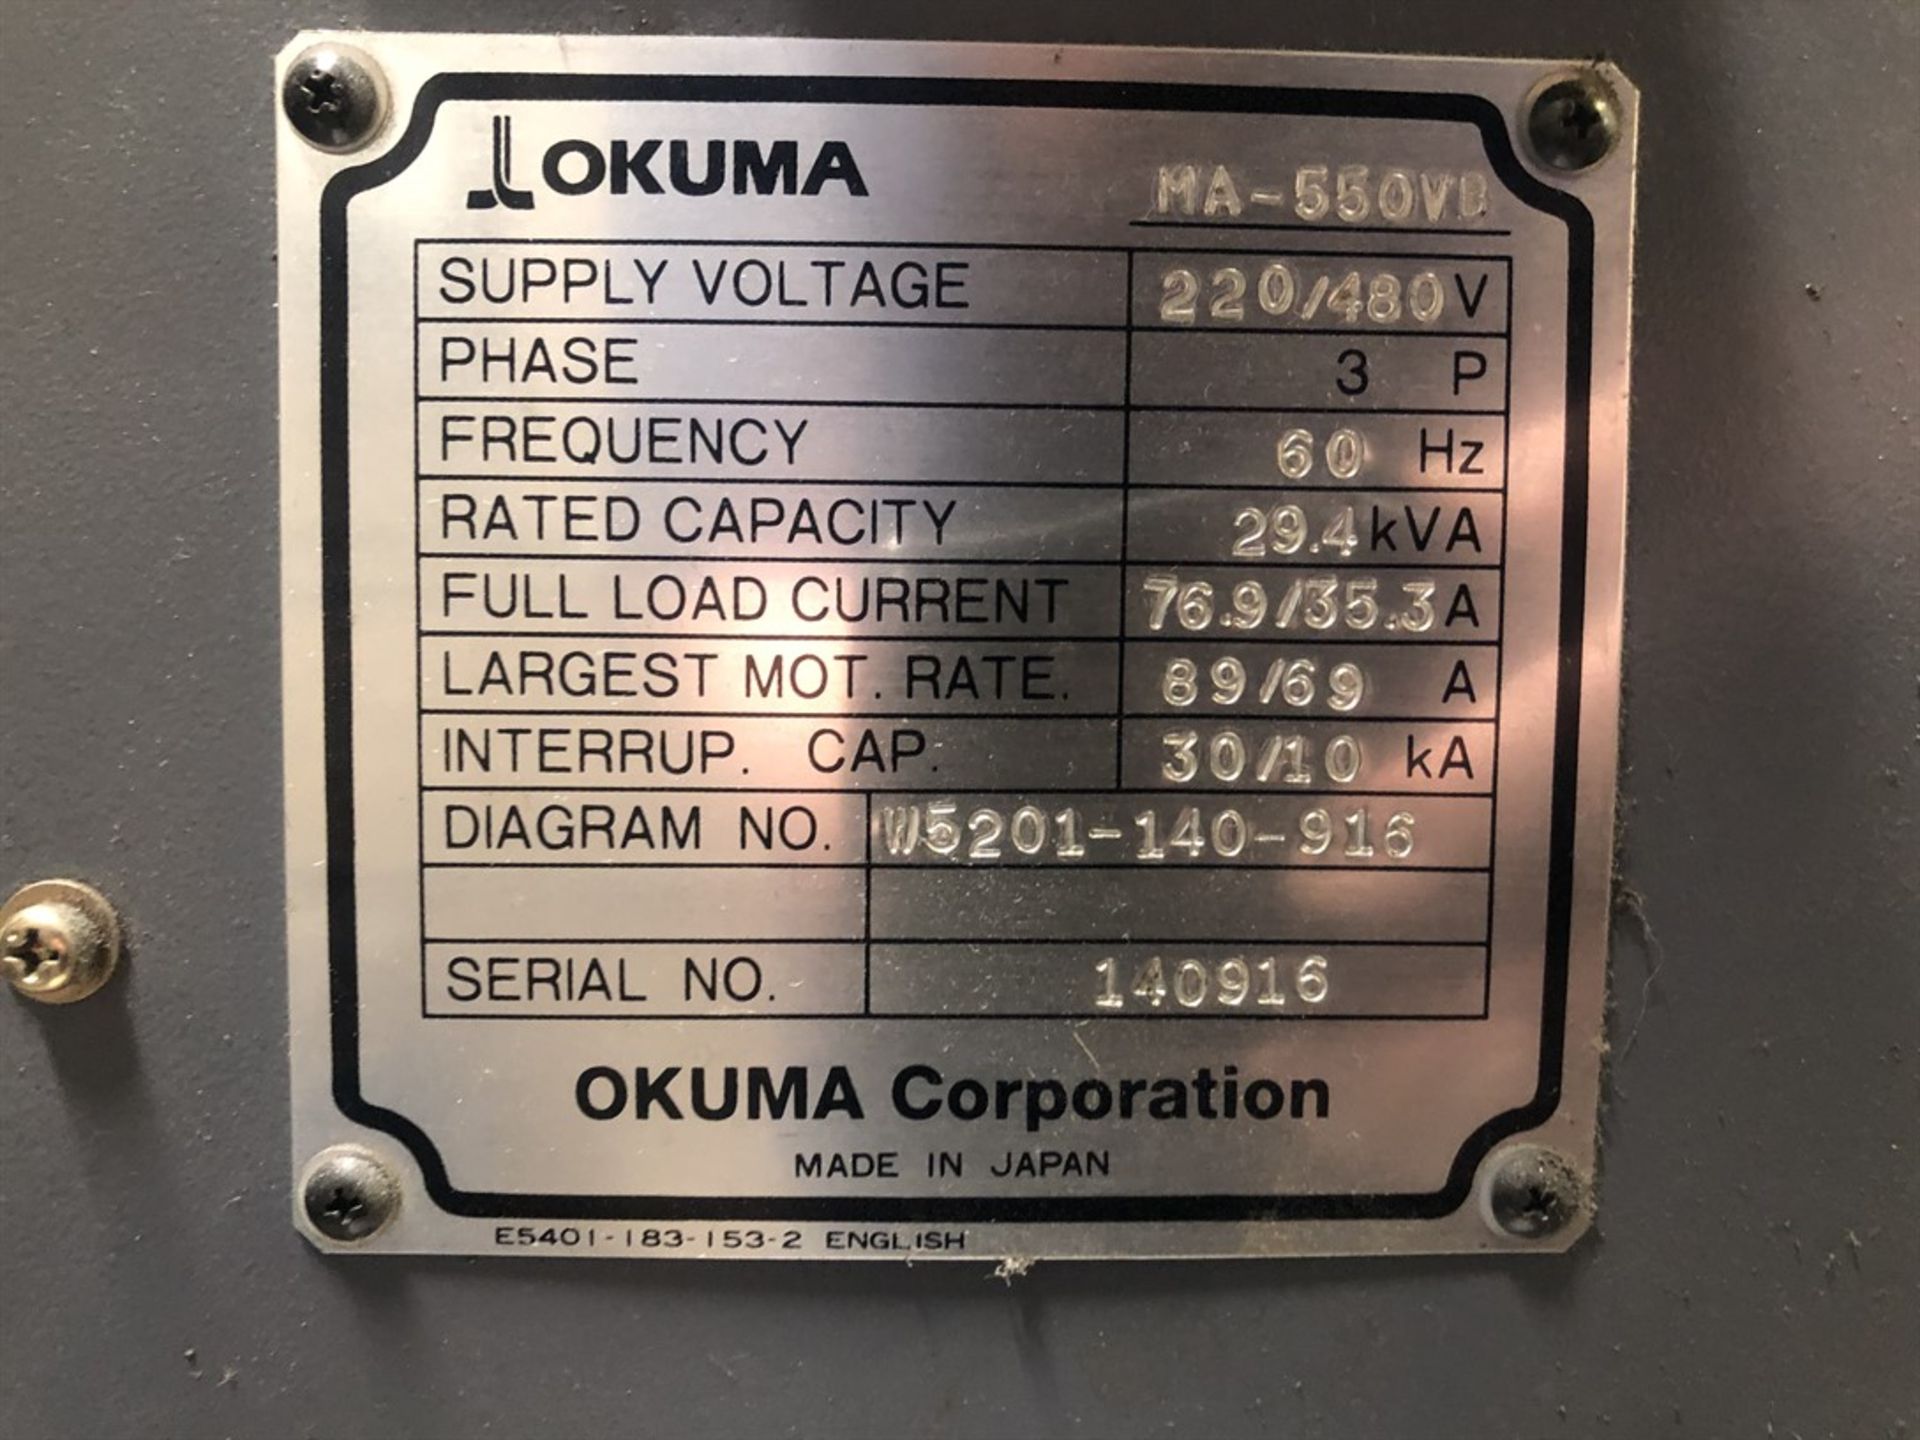 2008 OKUMA MA-550VB Vertical Machining Center, s/n 140916, OSP-P200M Control, 22” x 51” Table, - Image 10 of 11